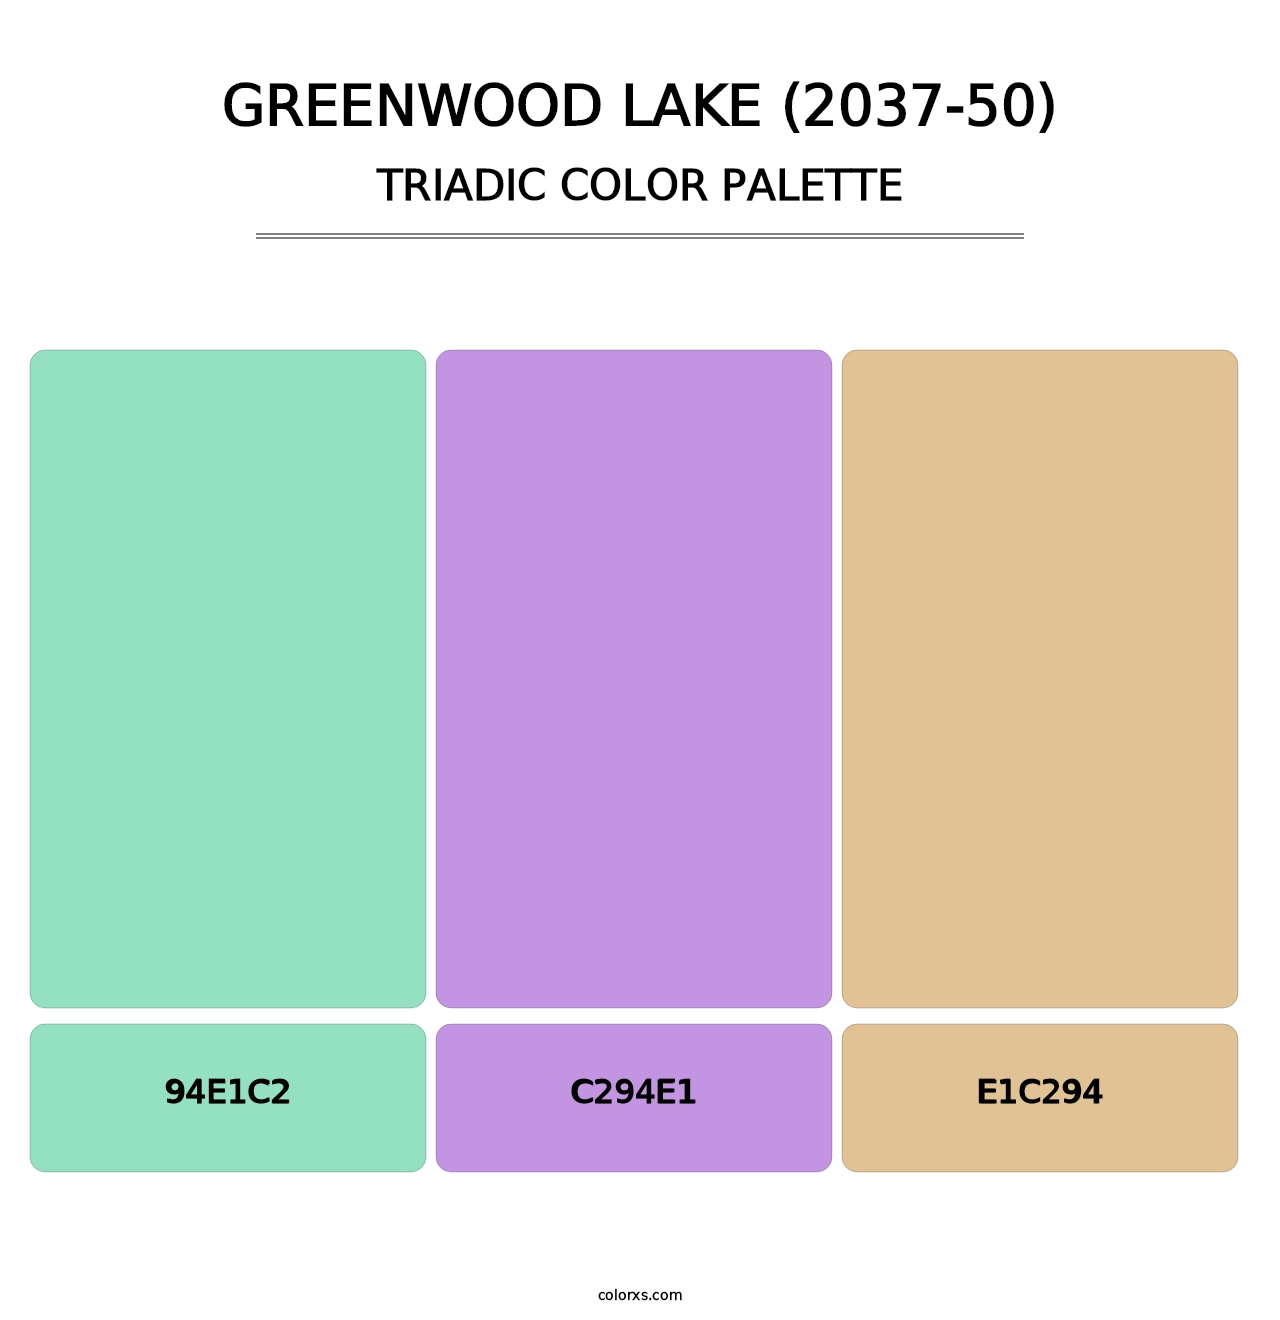 Greenwood Lake (2037-50) - Triadic Color Palette